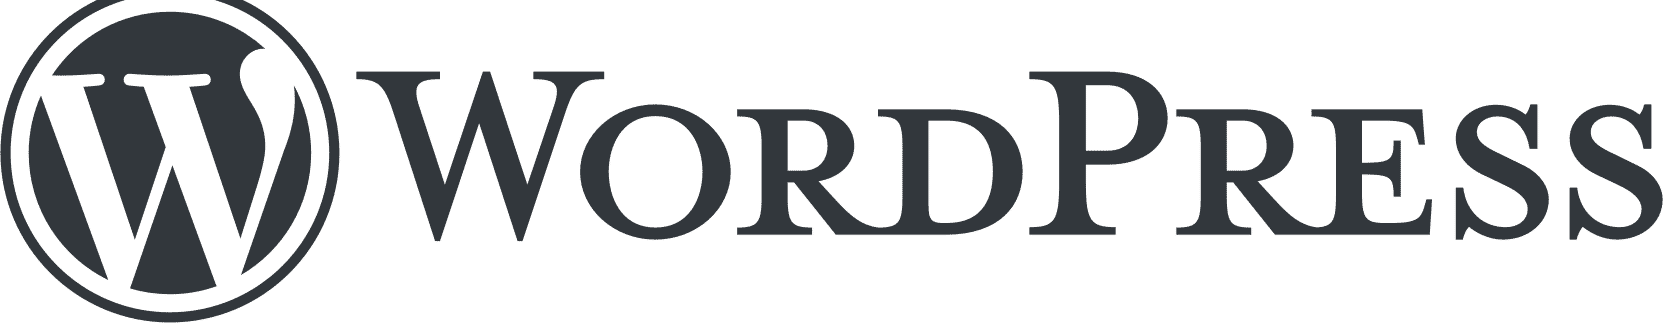 WordPress-logotype-standard-1